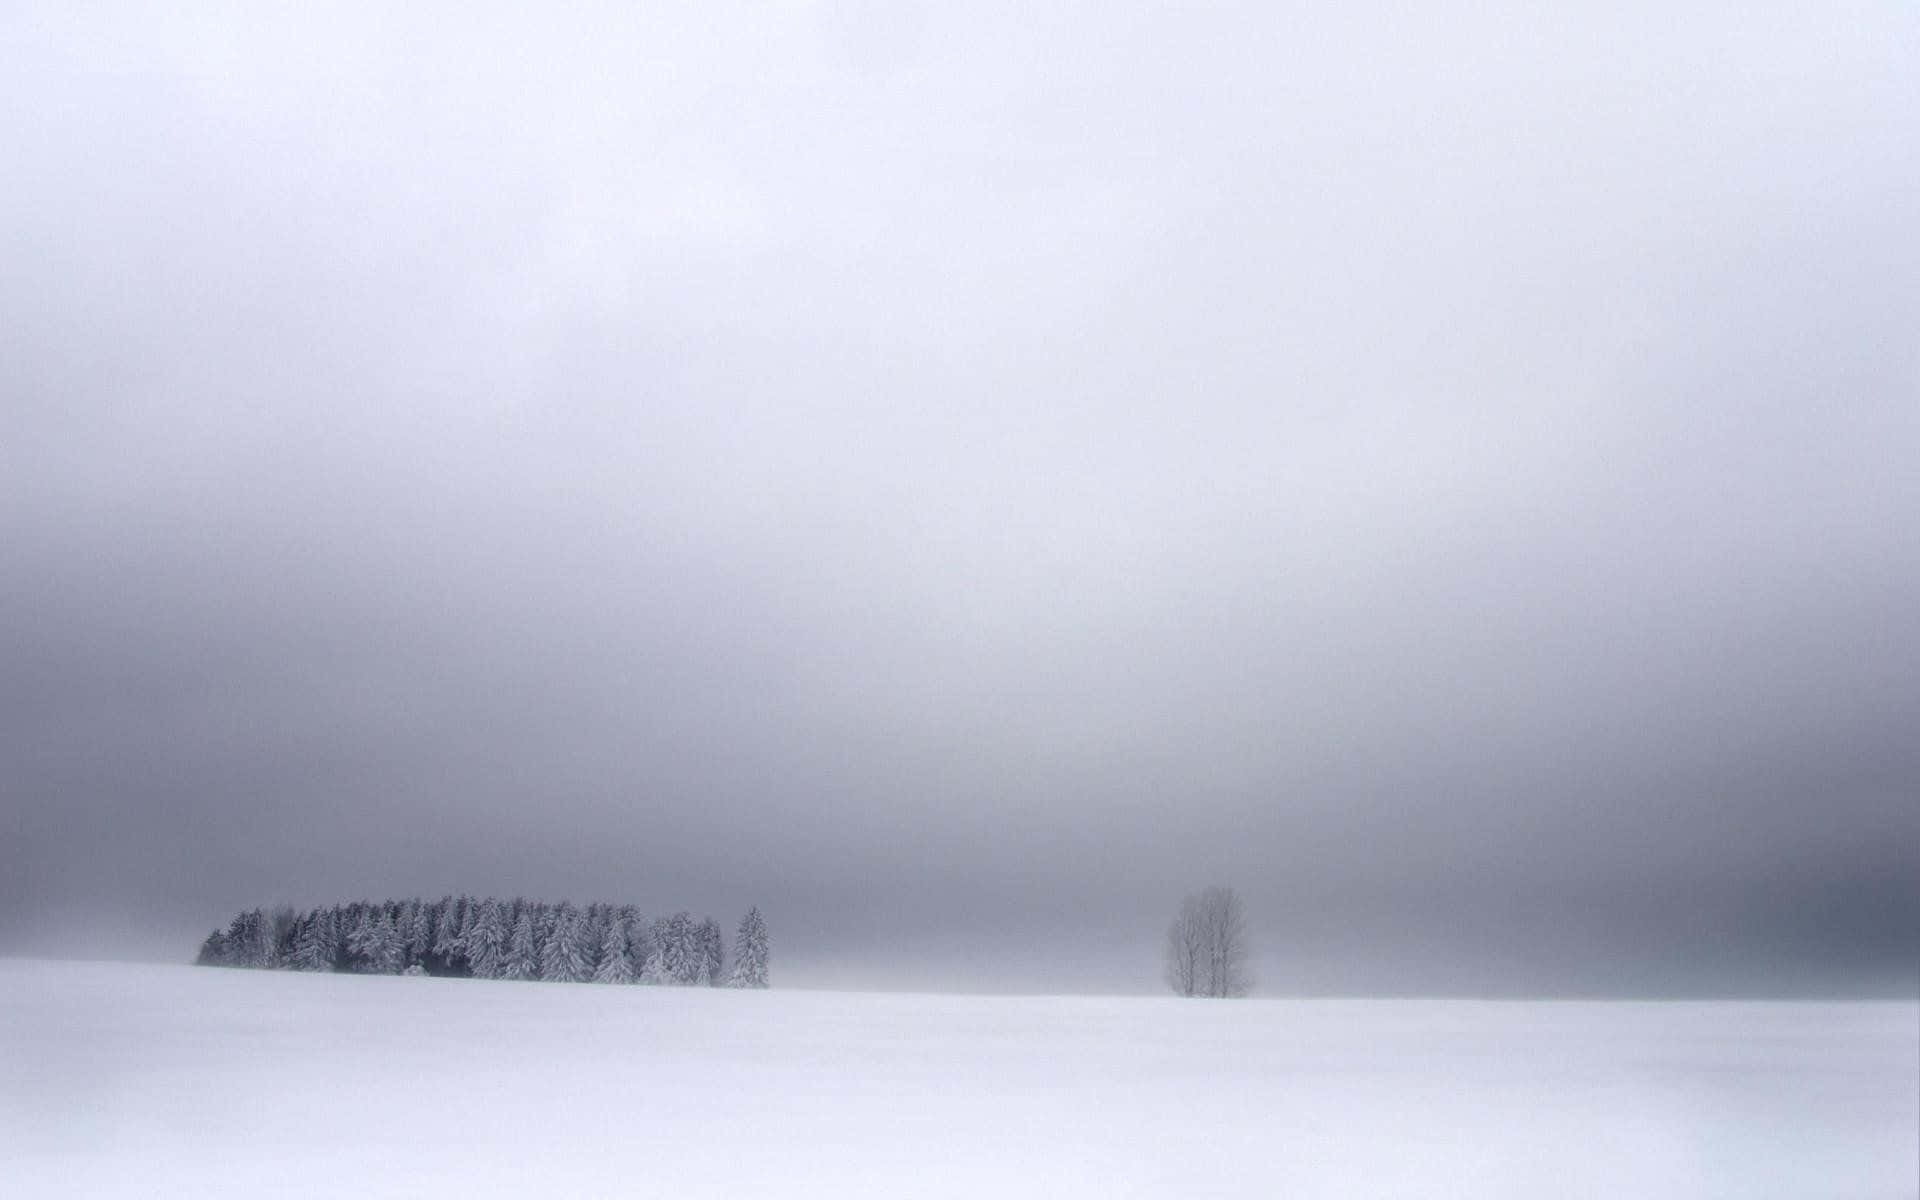 A winter wonderland captured during a mesmerizing snowstorm. Wallpaper